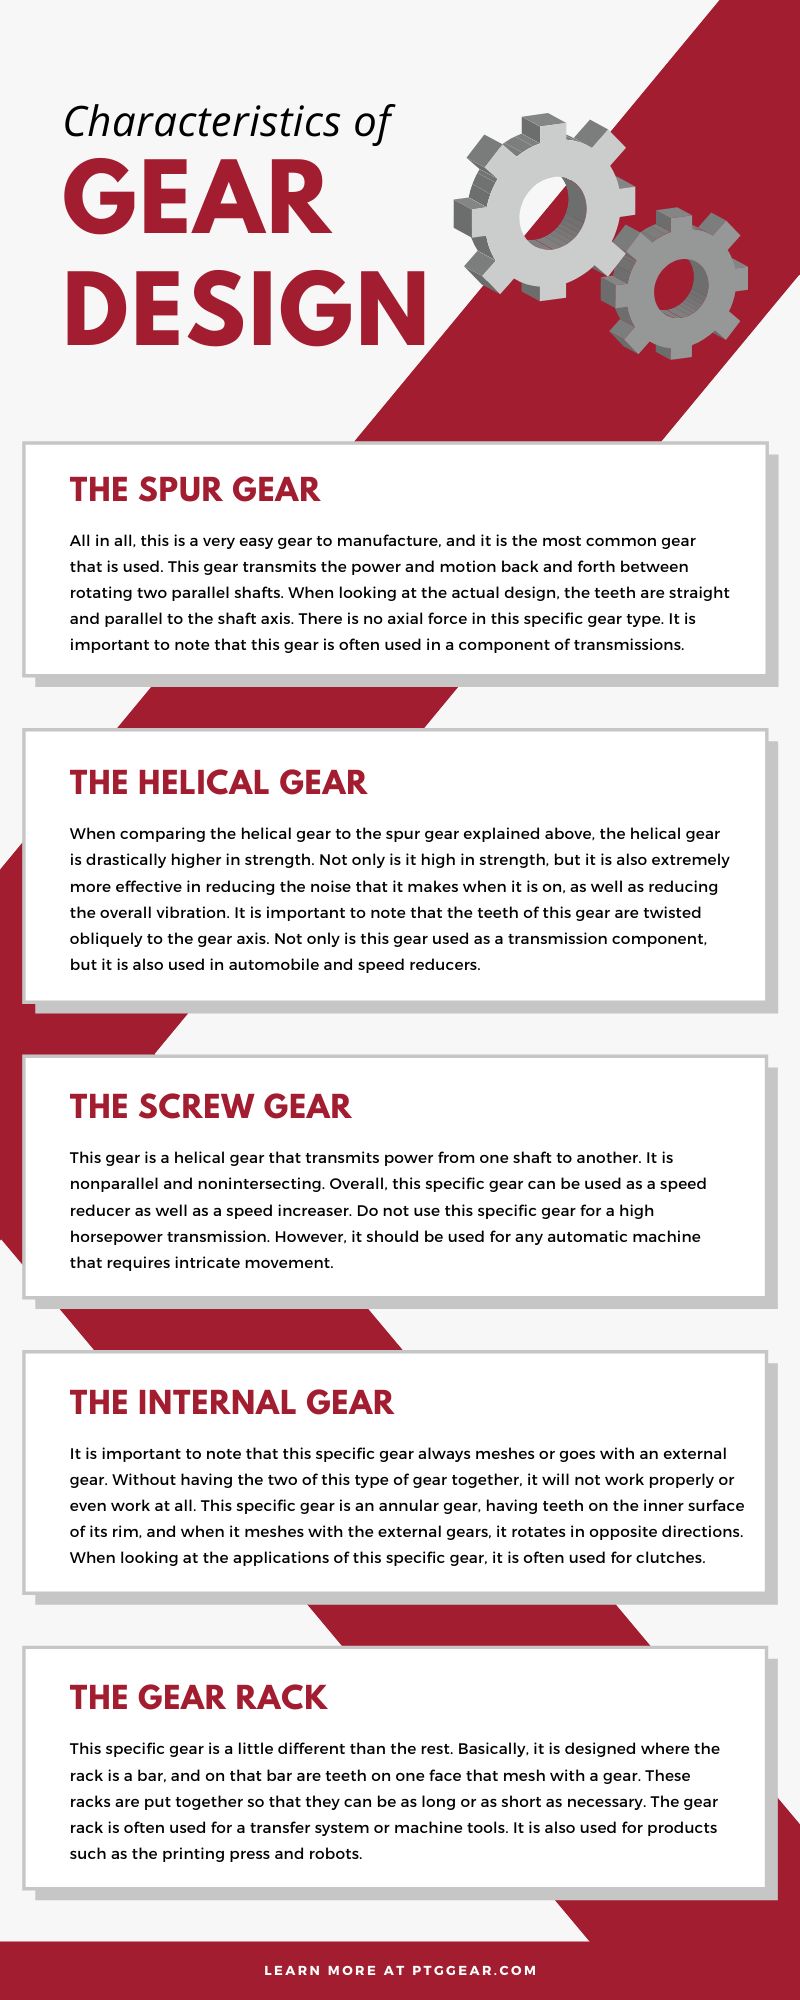 Characteristics of Gear Design